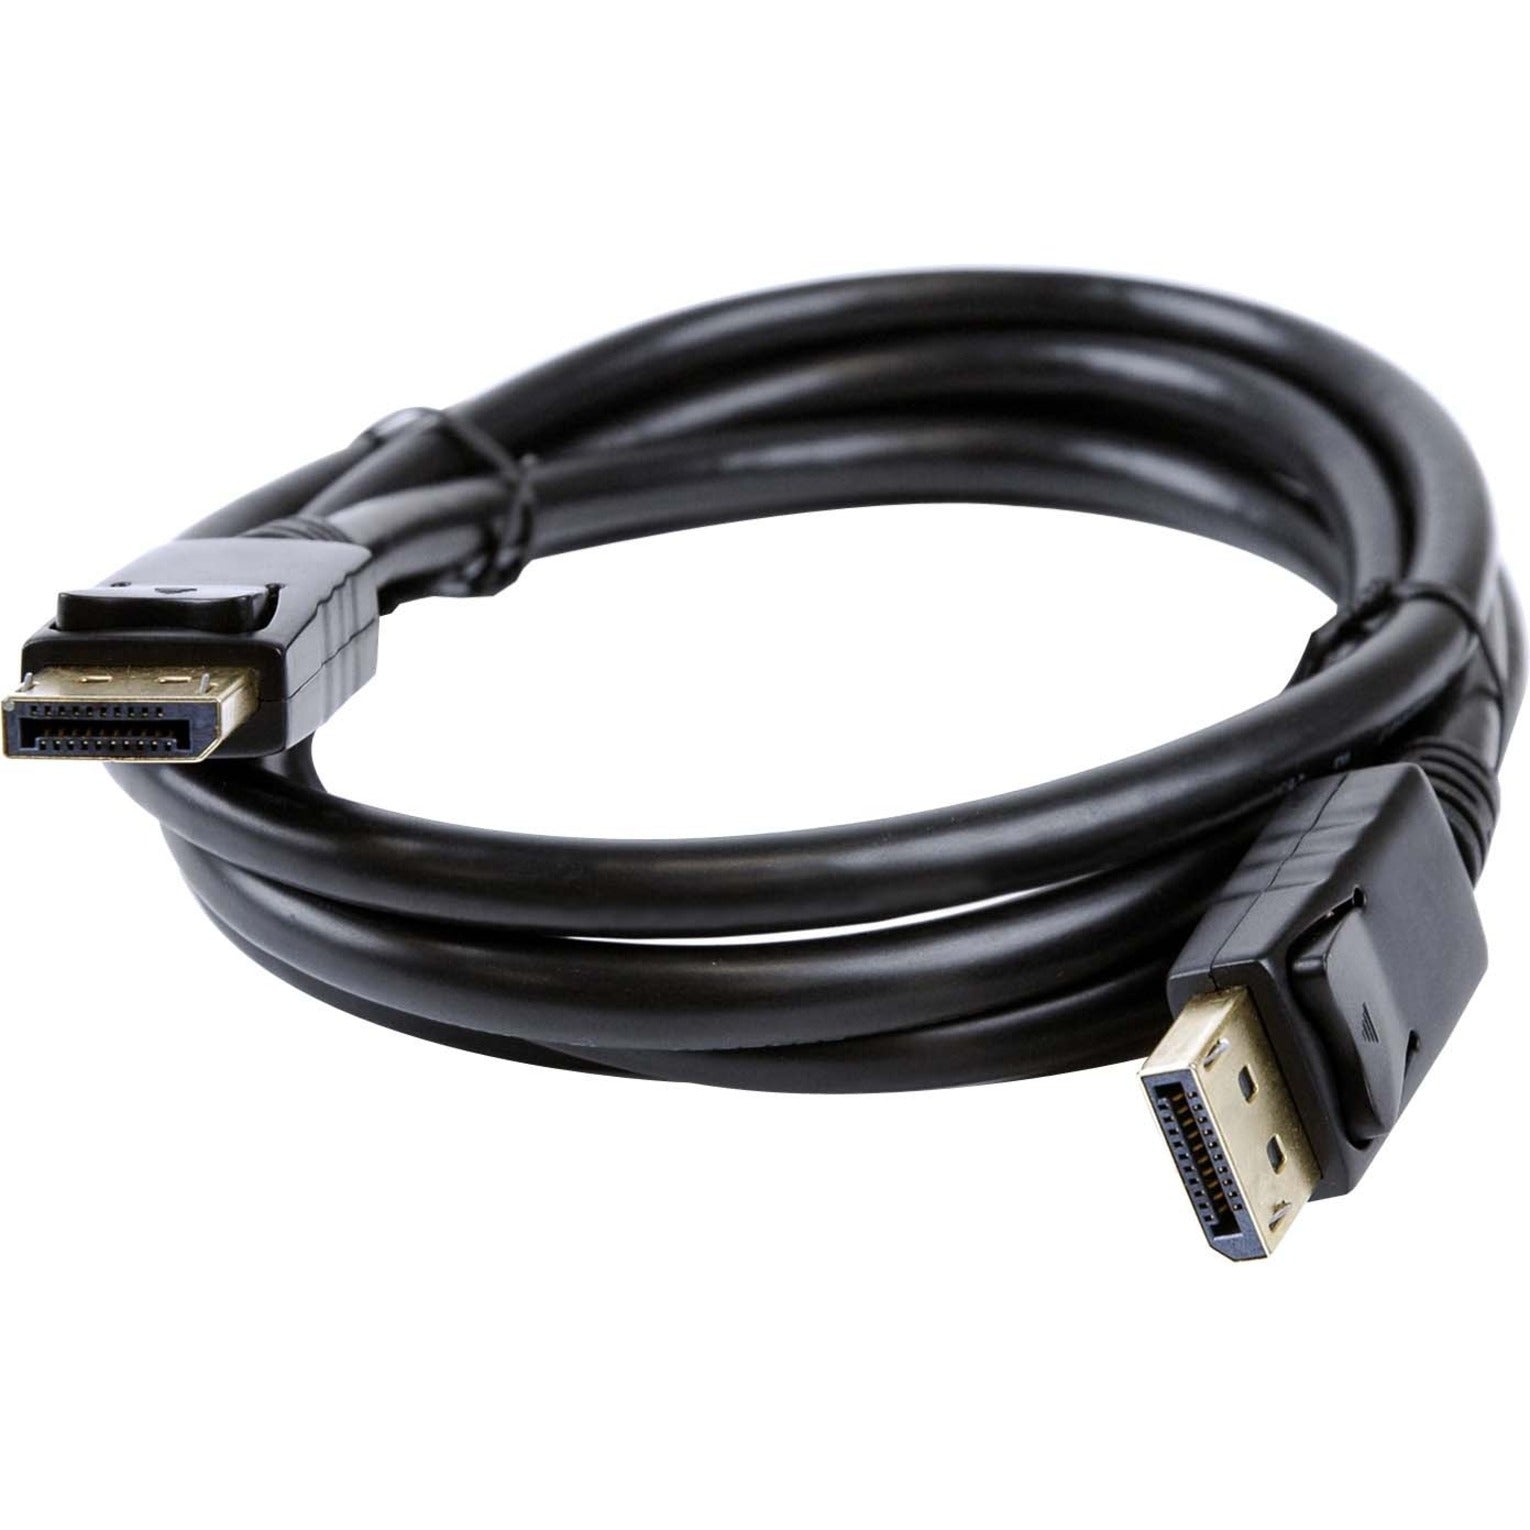 ViewSonic CB-00010555 DisplayPort Audio/Video Cable, 6 ft, Copper Conductor, Black